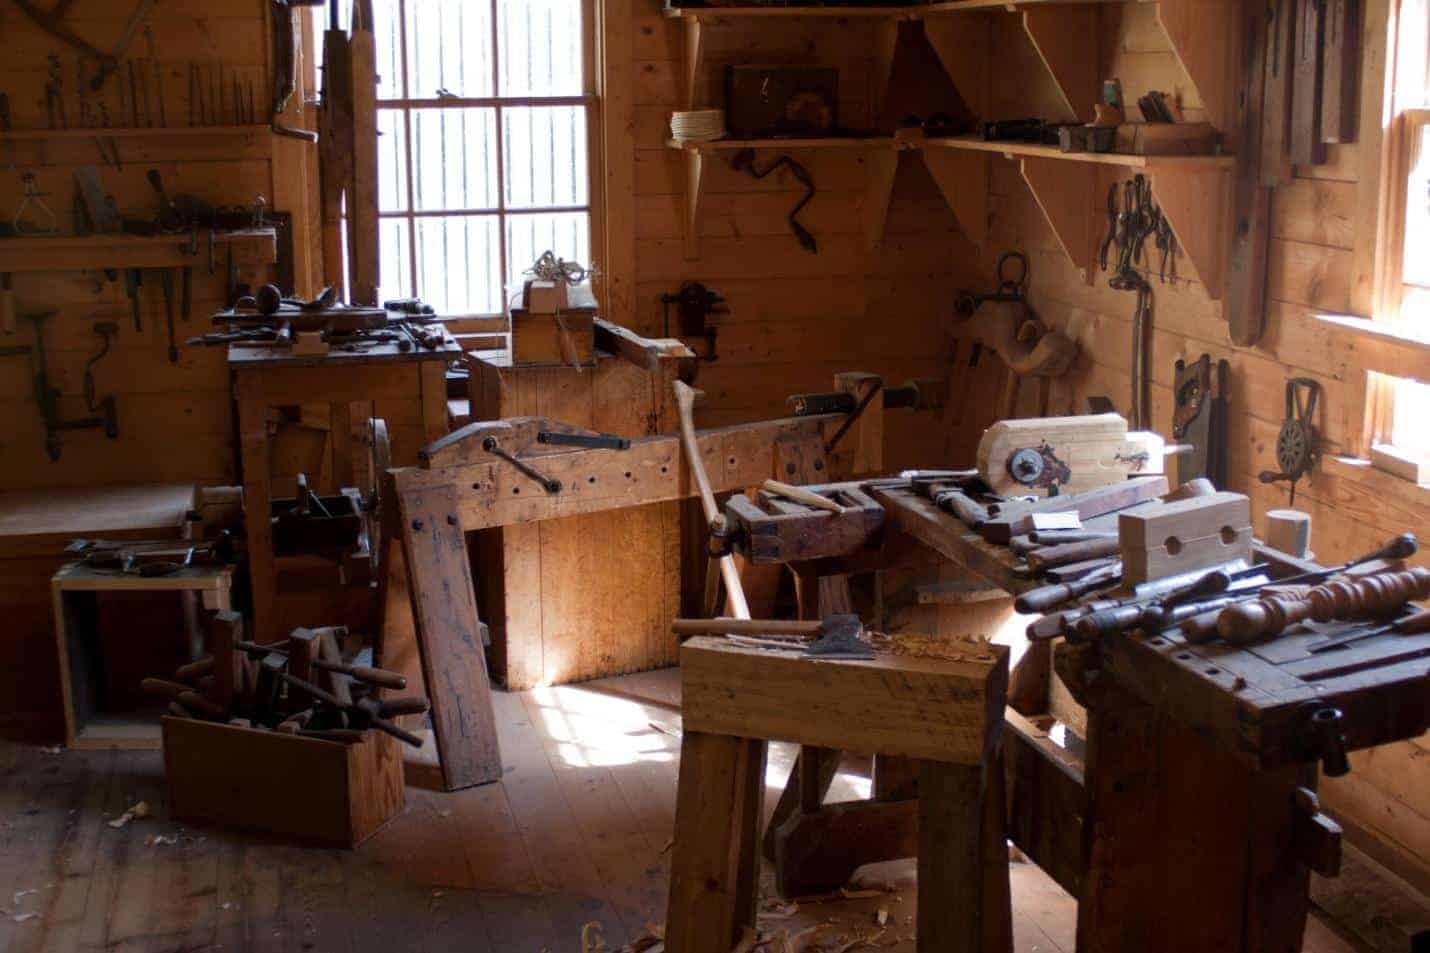 A woodworking workshop